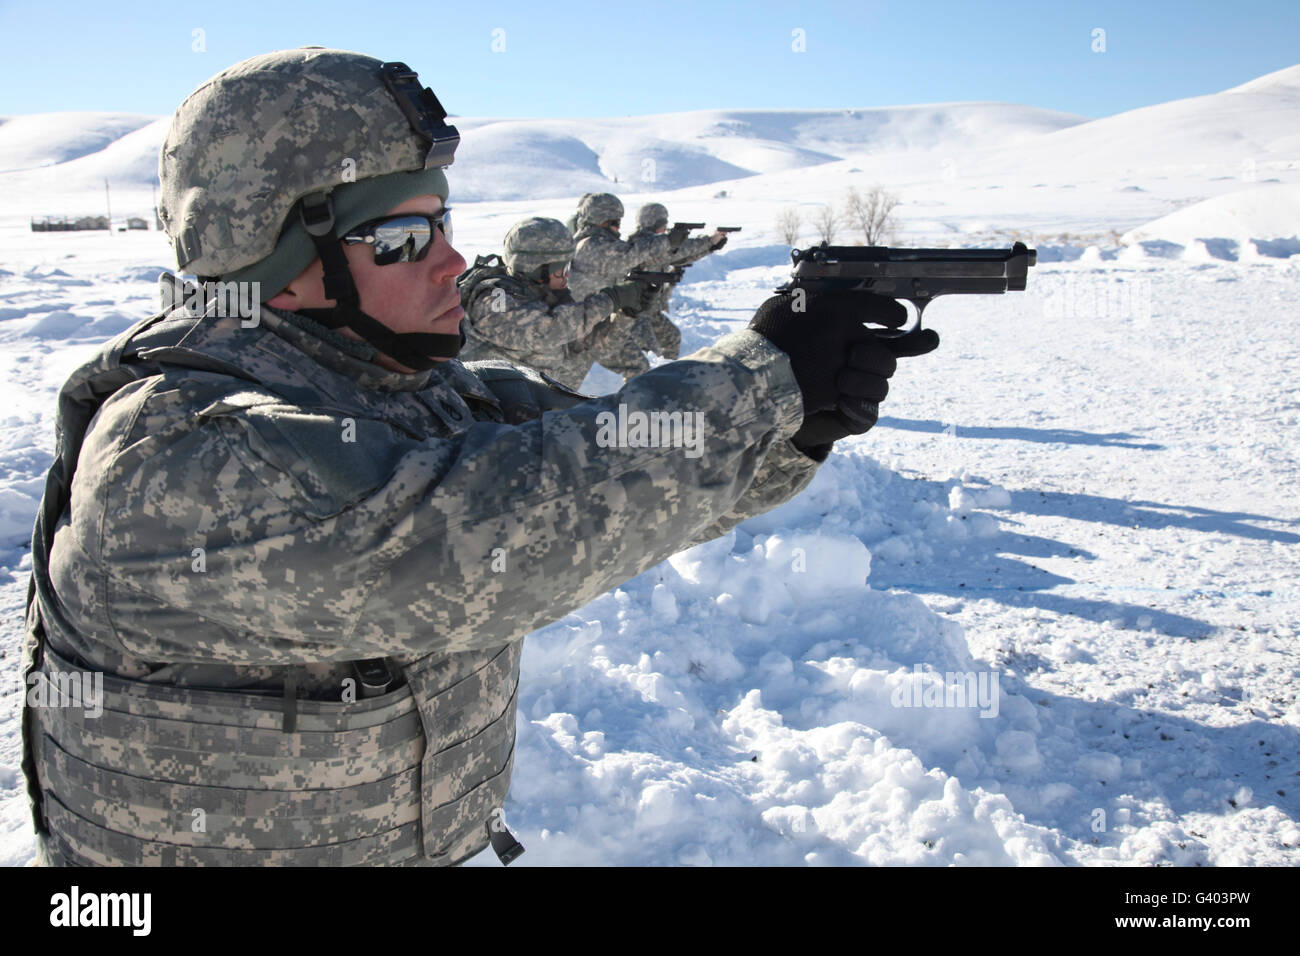 US Armee-Soldat feuert eine Pistole 9mm Berretta. Stockfoto